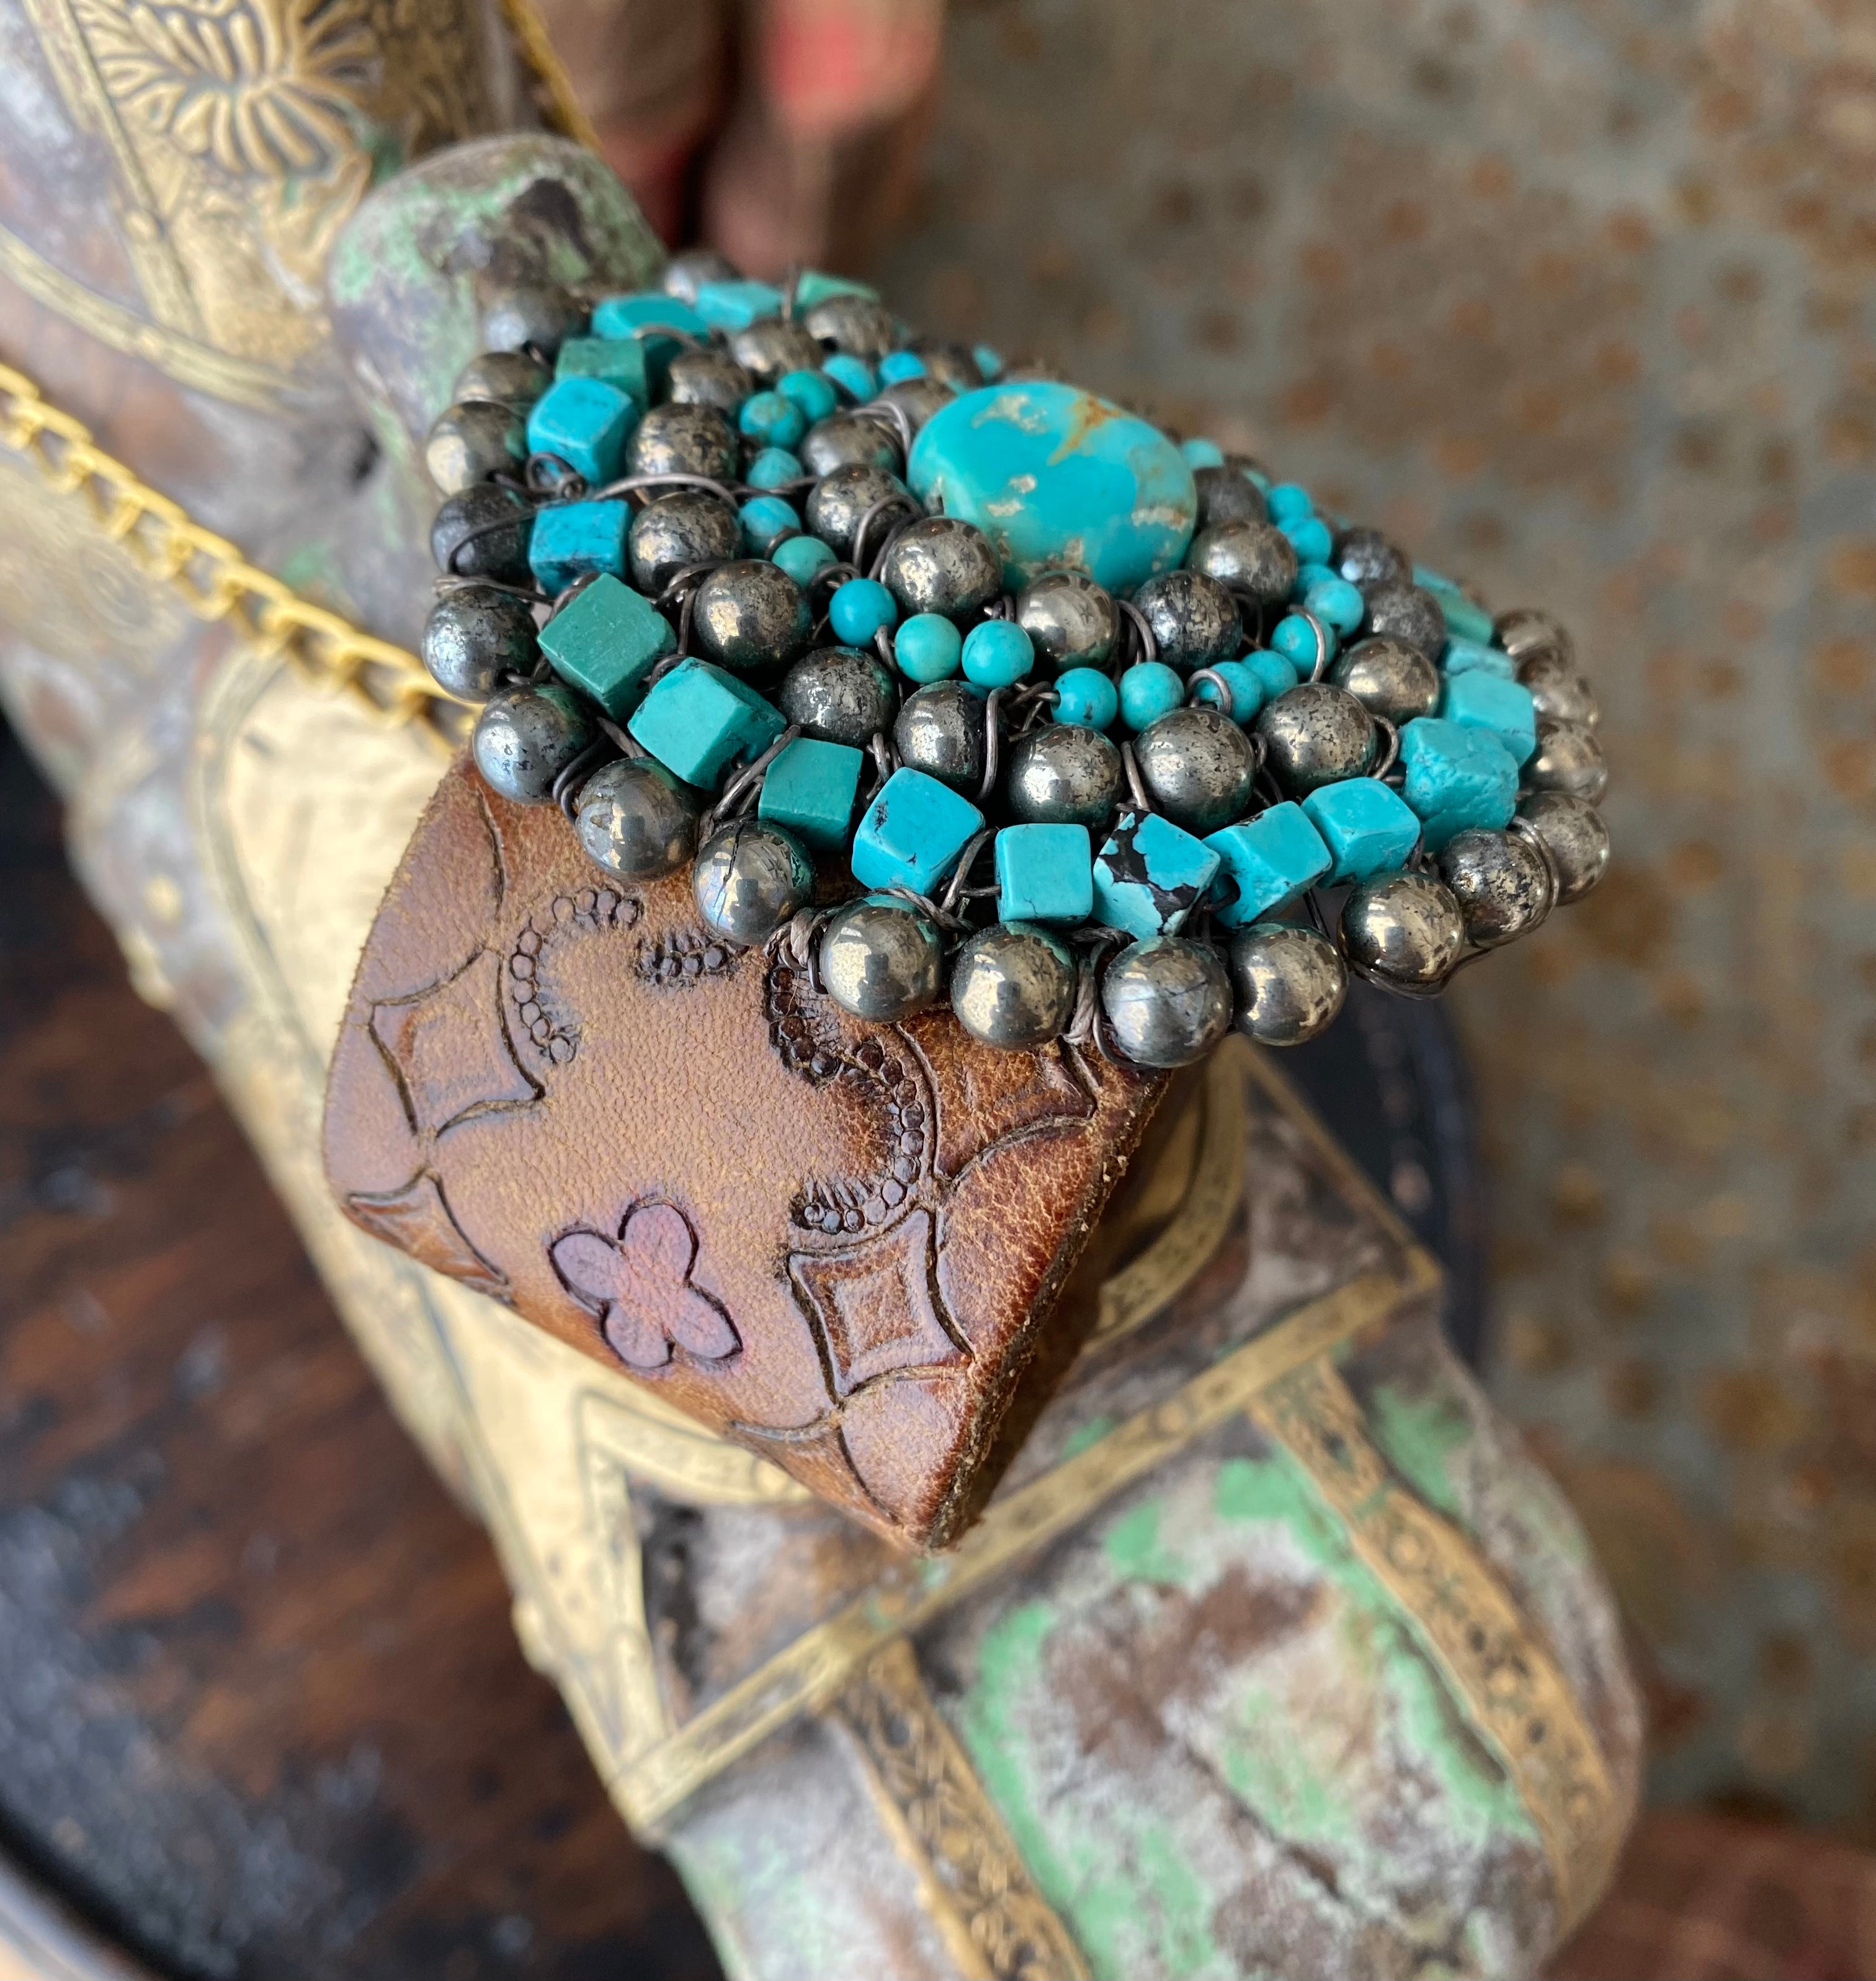 Turquoise & pyrite on upcycled leather belt cuff bracelet